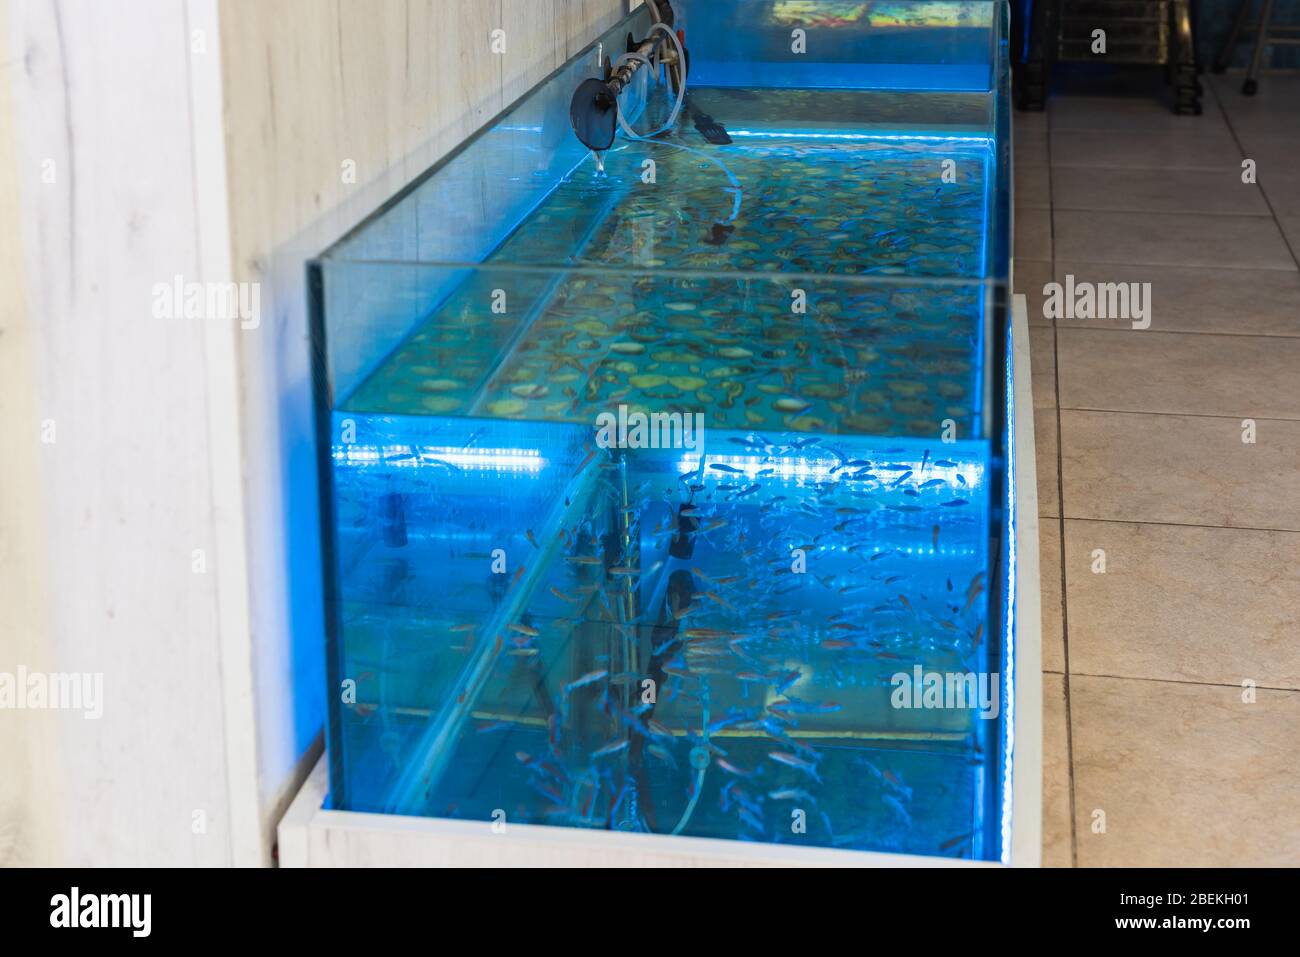 Pedicure fish spa. Aquarium with small fish for foot massage Wellness skin care treatment Stock Photo